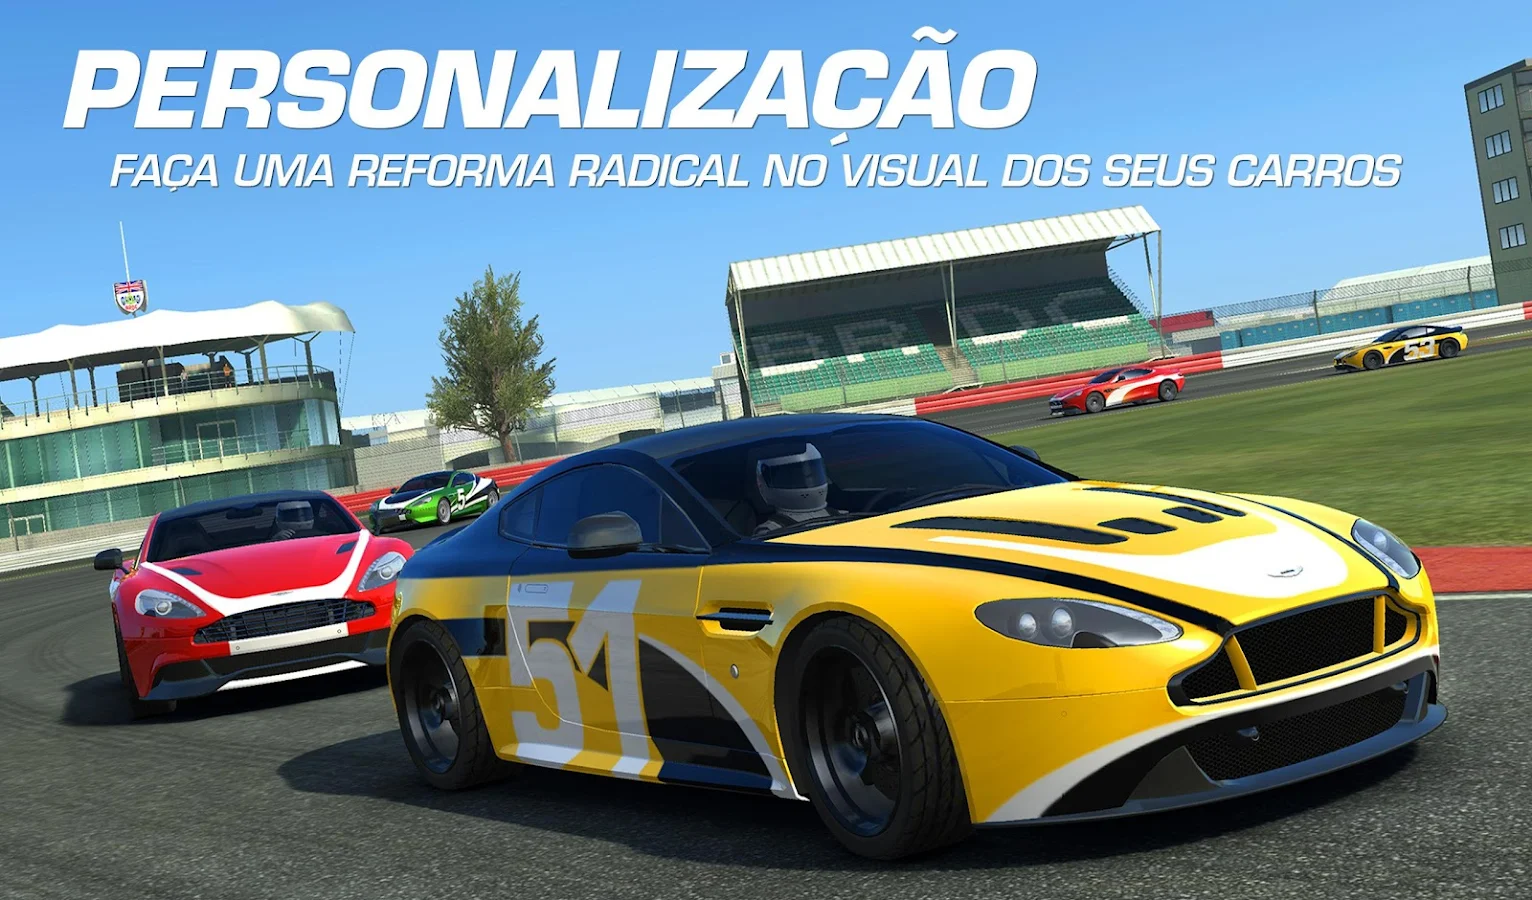 [Android] Real Racing 3 v2.6.0 Mod Money-Cars G32vcVXpBDYyXXmBNNFW9qysBsx04Ugmn39ojmH9ddmfWFyvmceqg9IehwVqDDb1Ku4=h900-rw